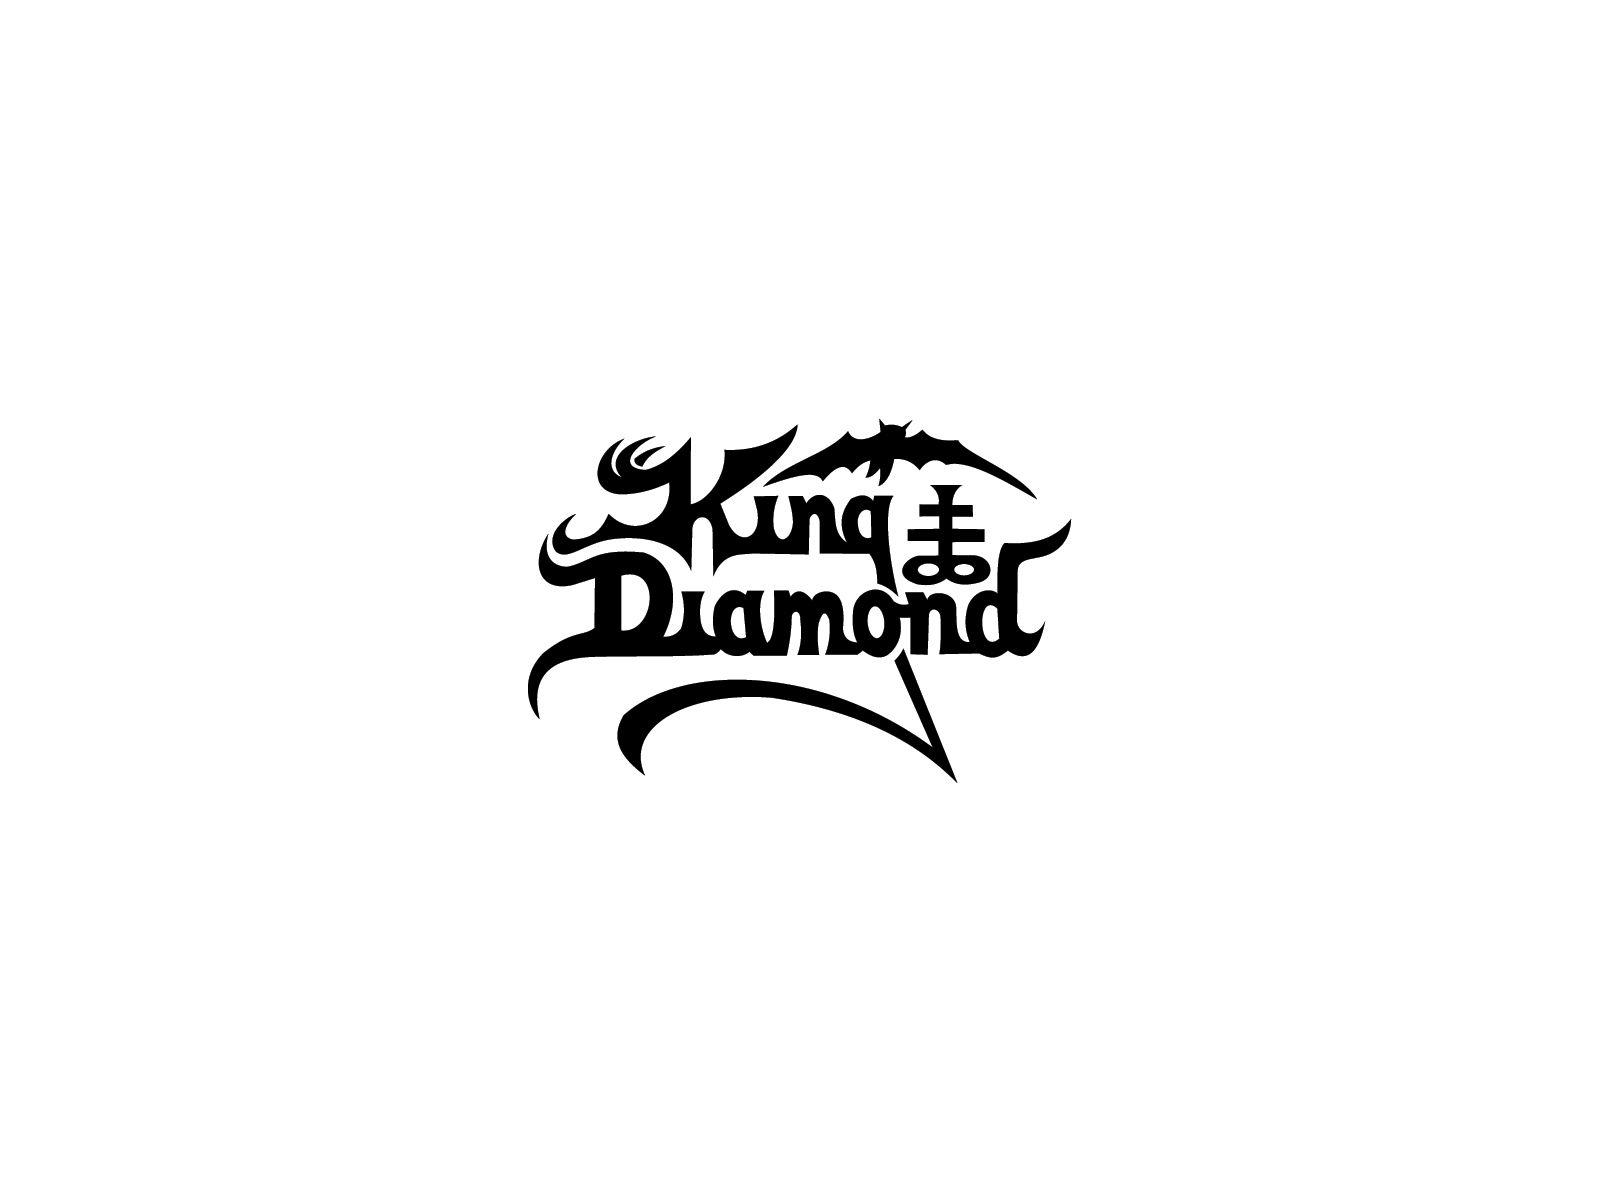 Metal Diamond Logo - Heavy metal logos | Band logos - Rock band logos, metal bands logos ...